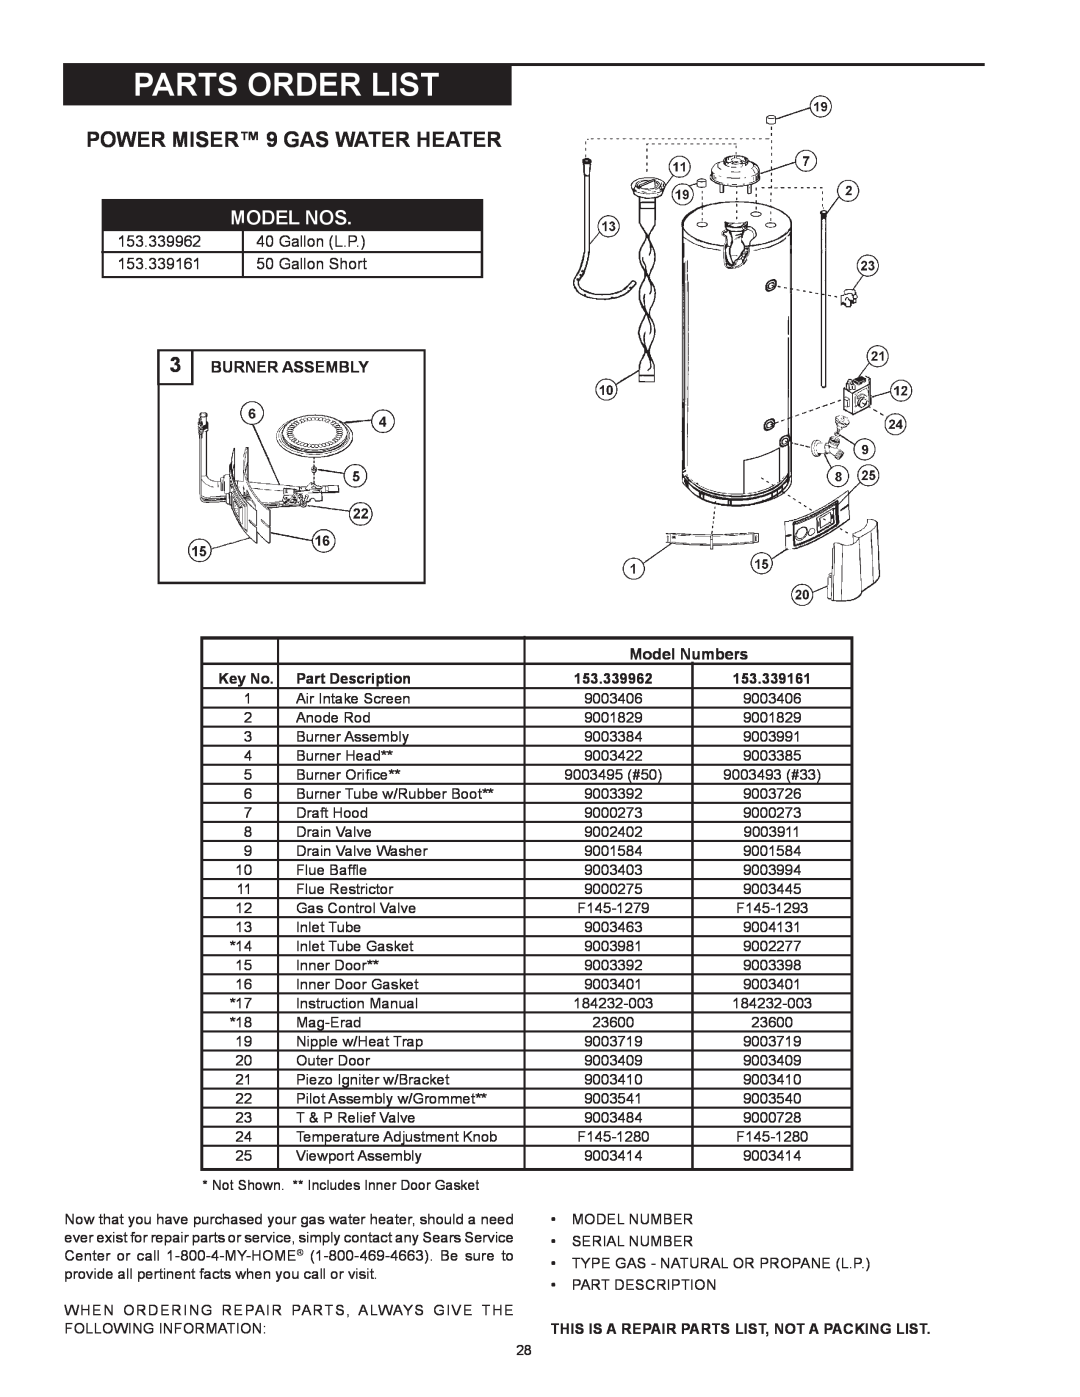 Kenmore 153.339562 Parts Order List, Model Nos, 153.339962, Gallon L.P, 153.339161, Gallon Short, 3BURNER ASSEMBLY 